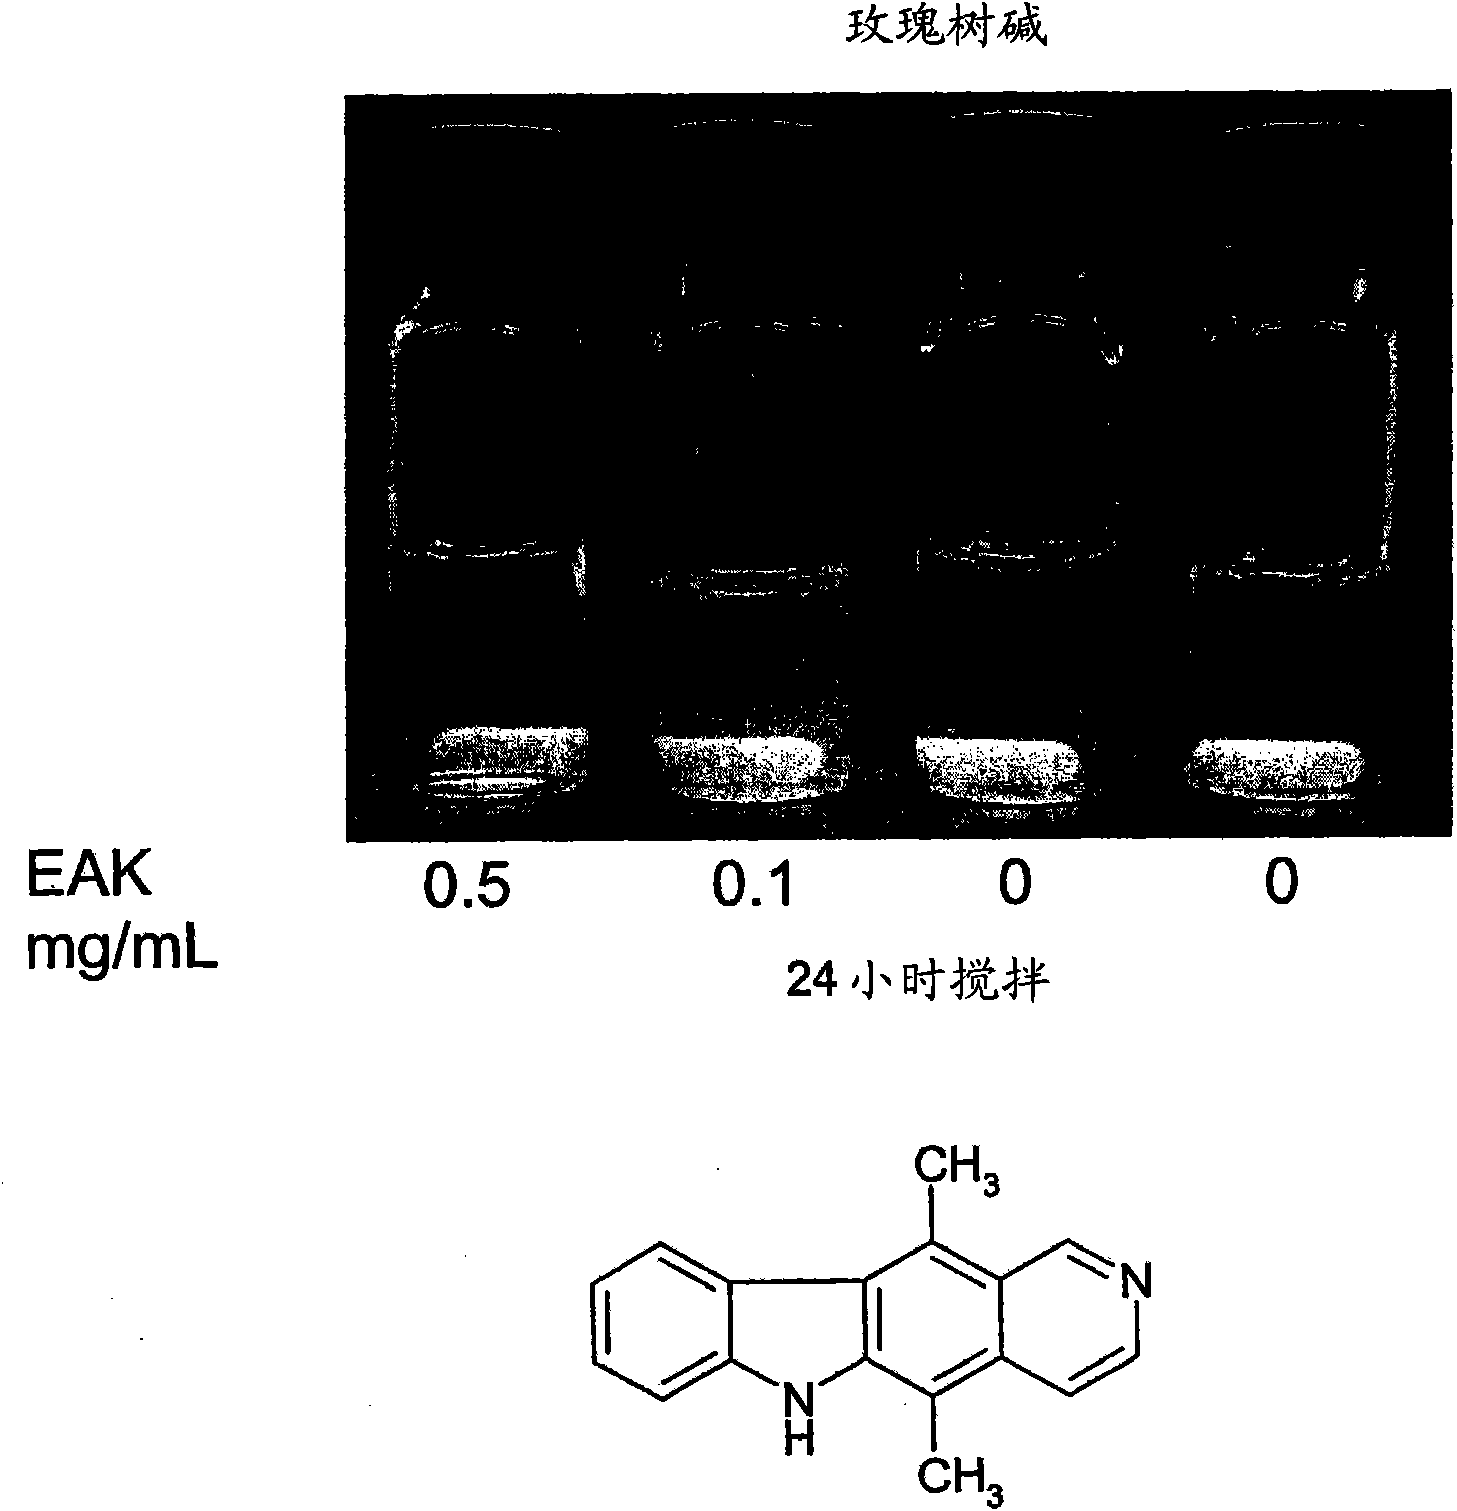 Amino acid pairing-based self assembling peptides and methods